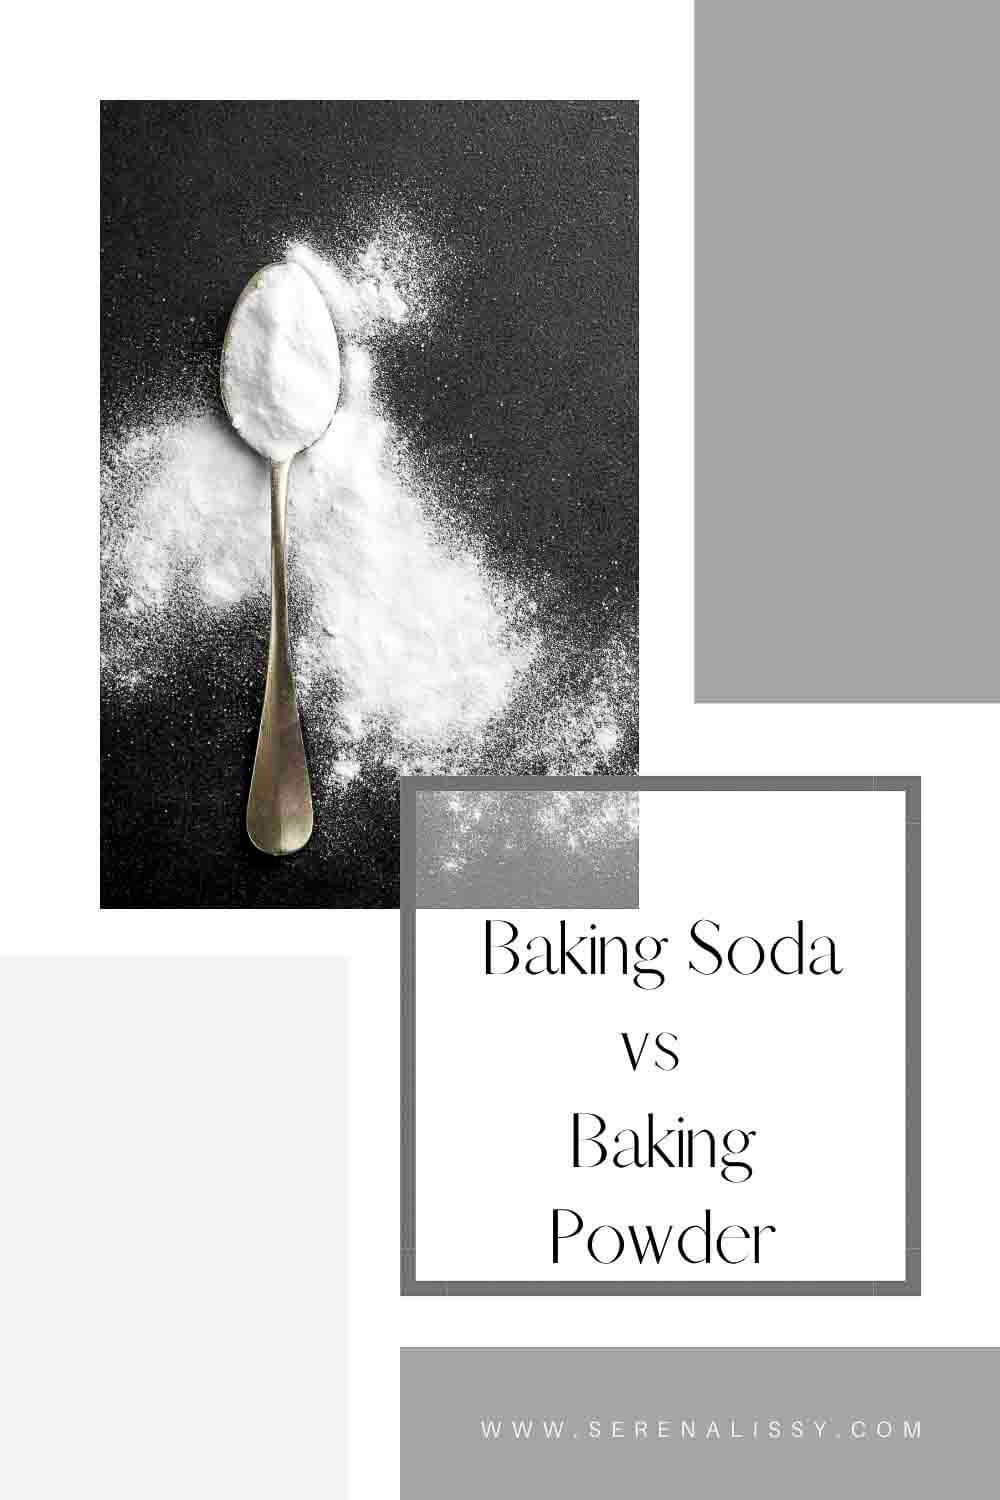 Baking Soda vs. Baking Powder